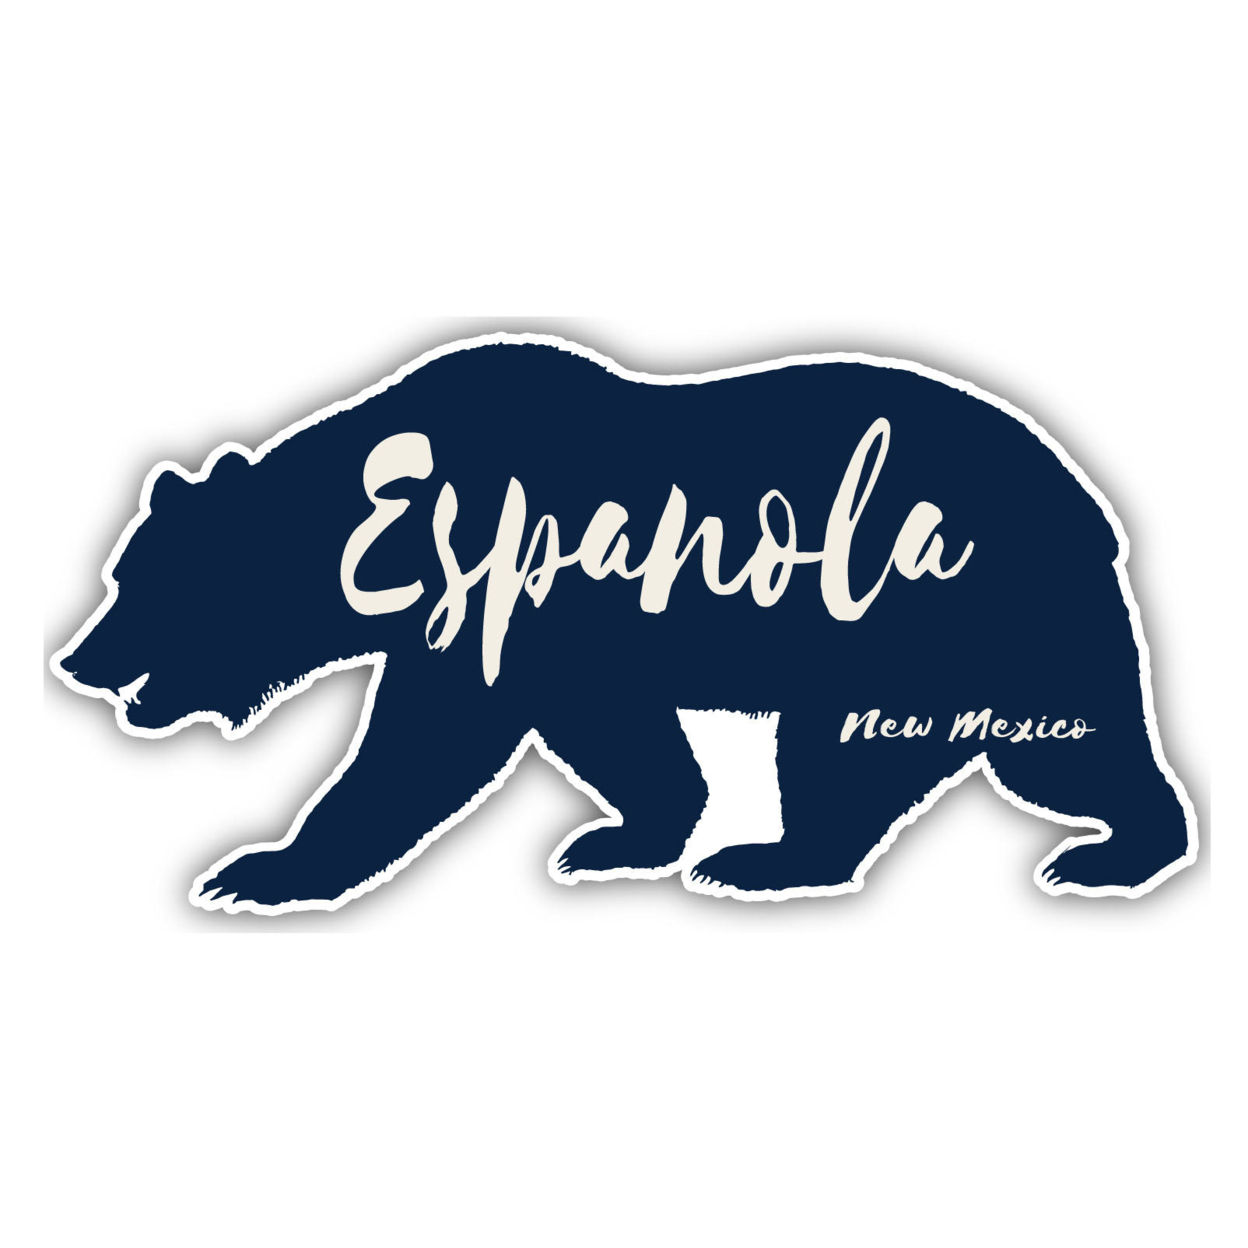 Espanola New Mexico Souvenir Decorative Stickers (Choose Theme And Size) - Single Unit, 2-Inch, Bear